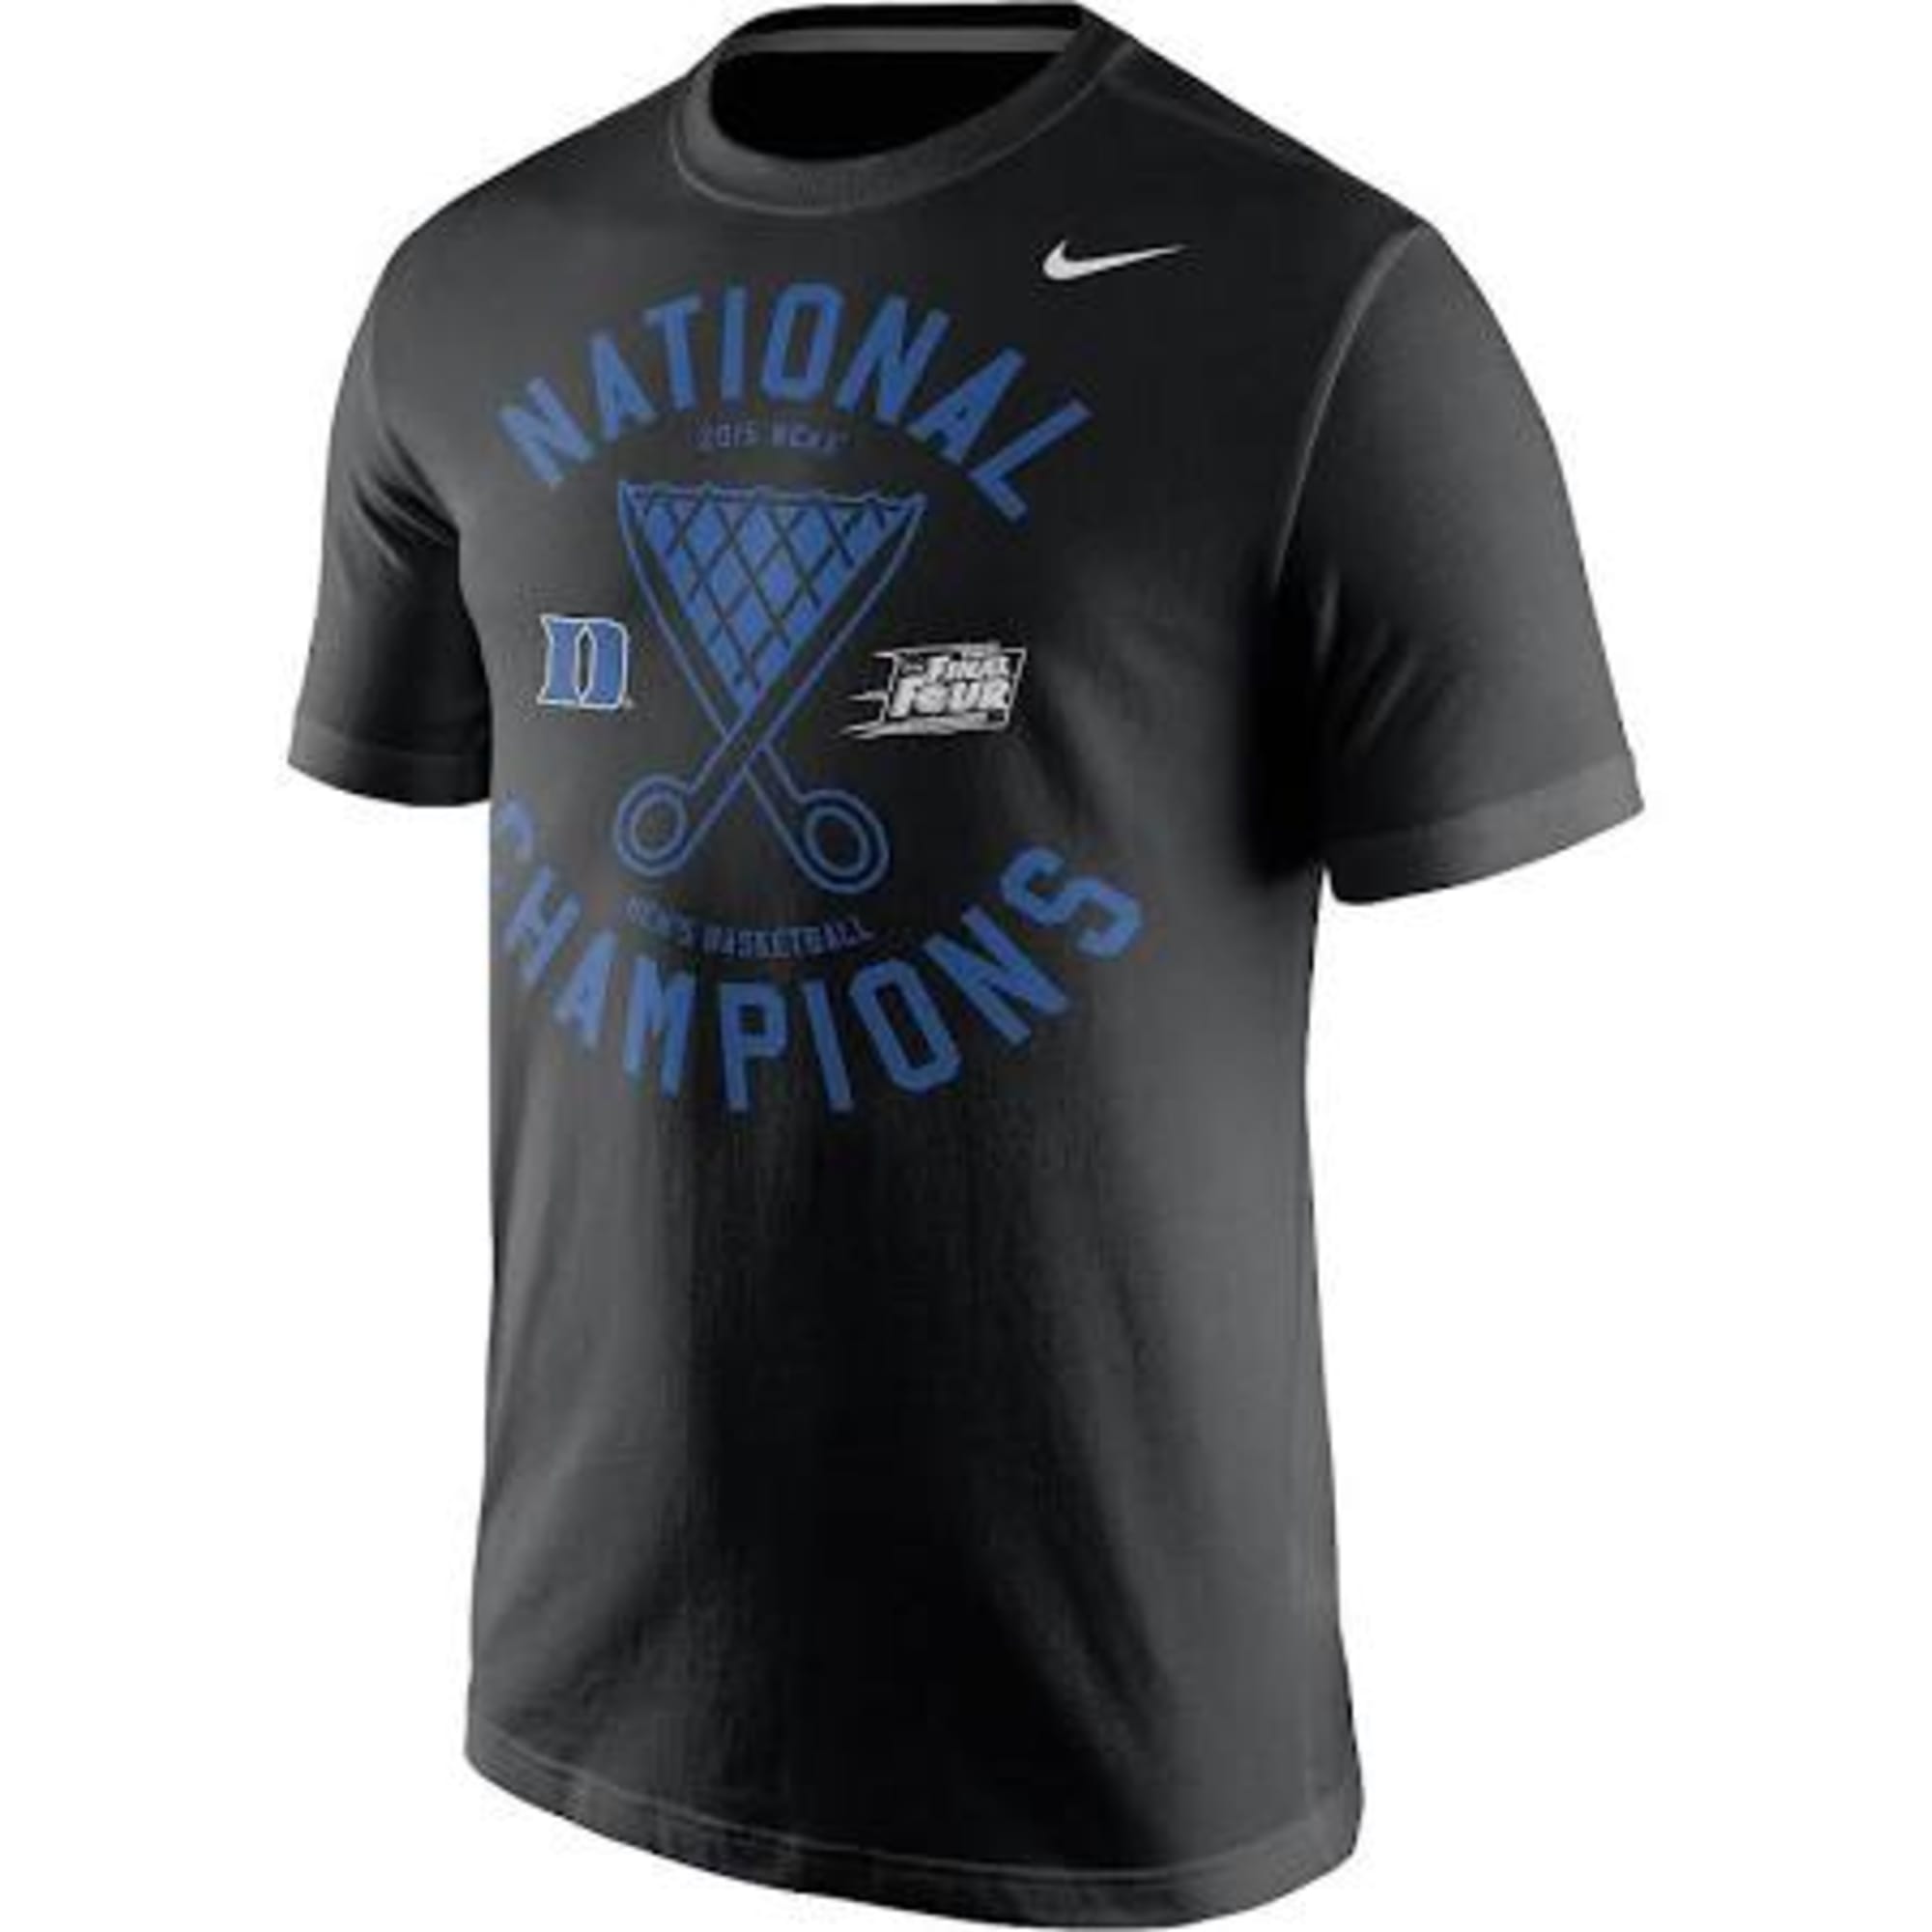 Duke Blue Devils 2015 National Championship Nike shirt (Photo)